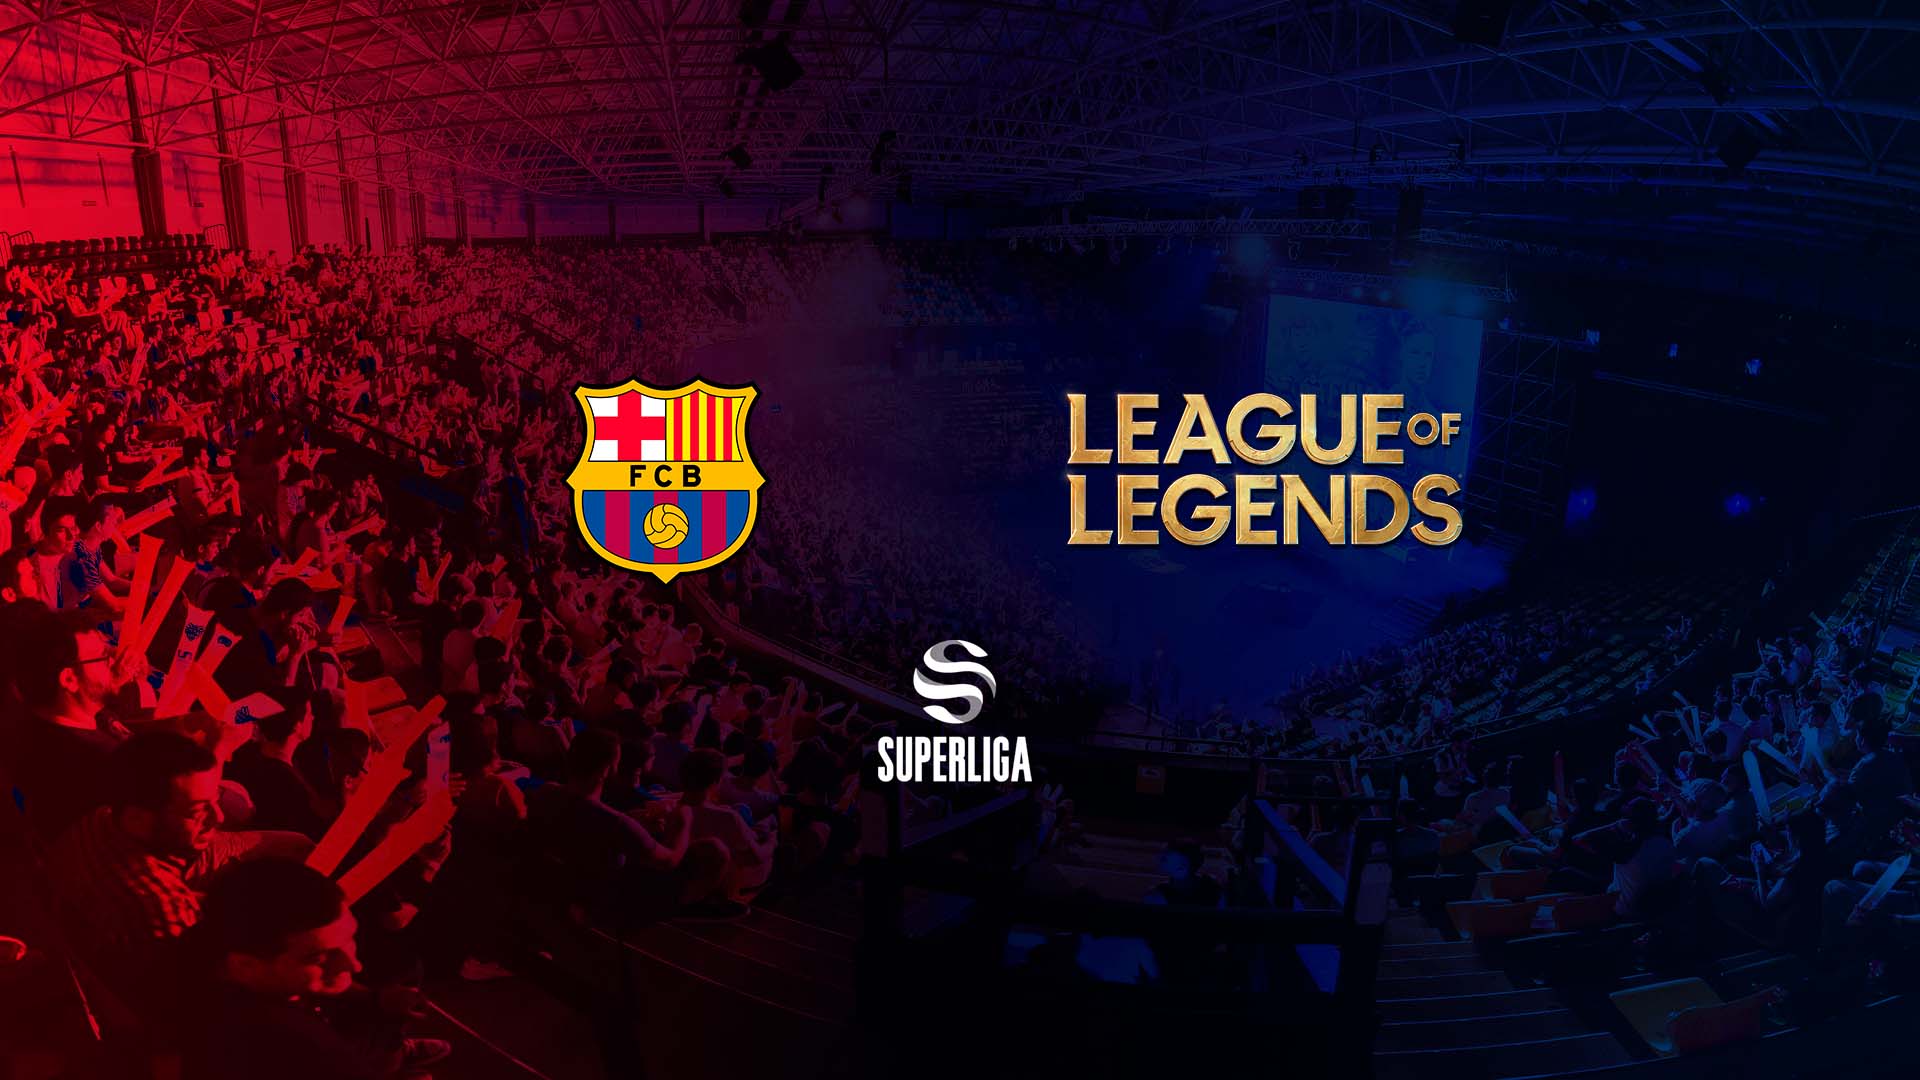 2020 LoL Esports Season Begins Jan 13th – League of Legends